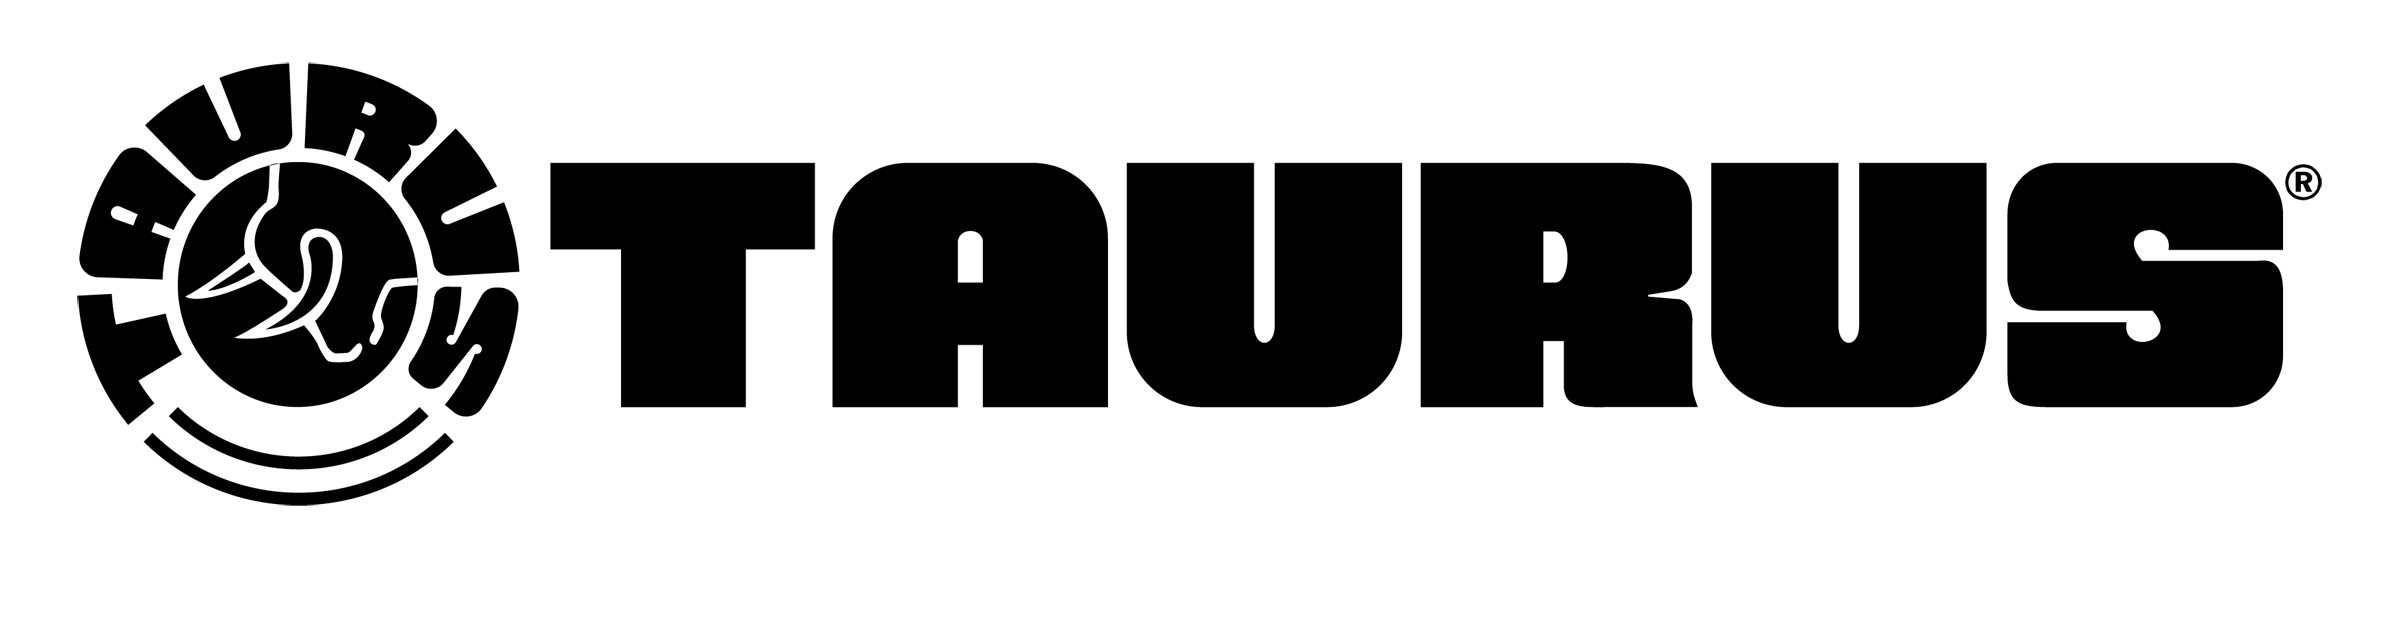 Taurus Firearms Logo - Taurus Firearms. Products I Love. Taurus logo, Guns, Taurus